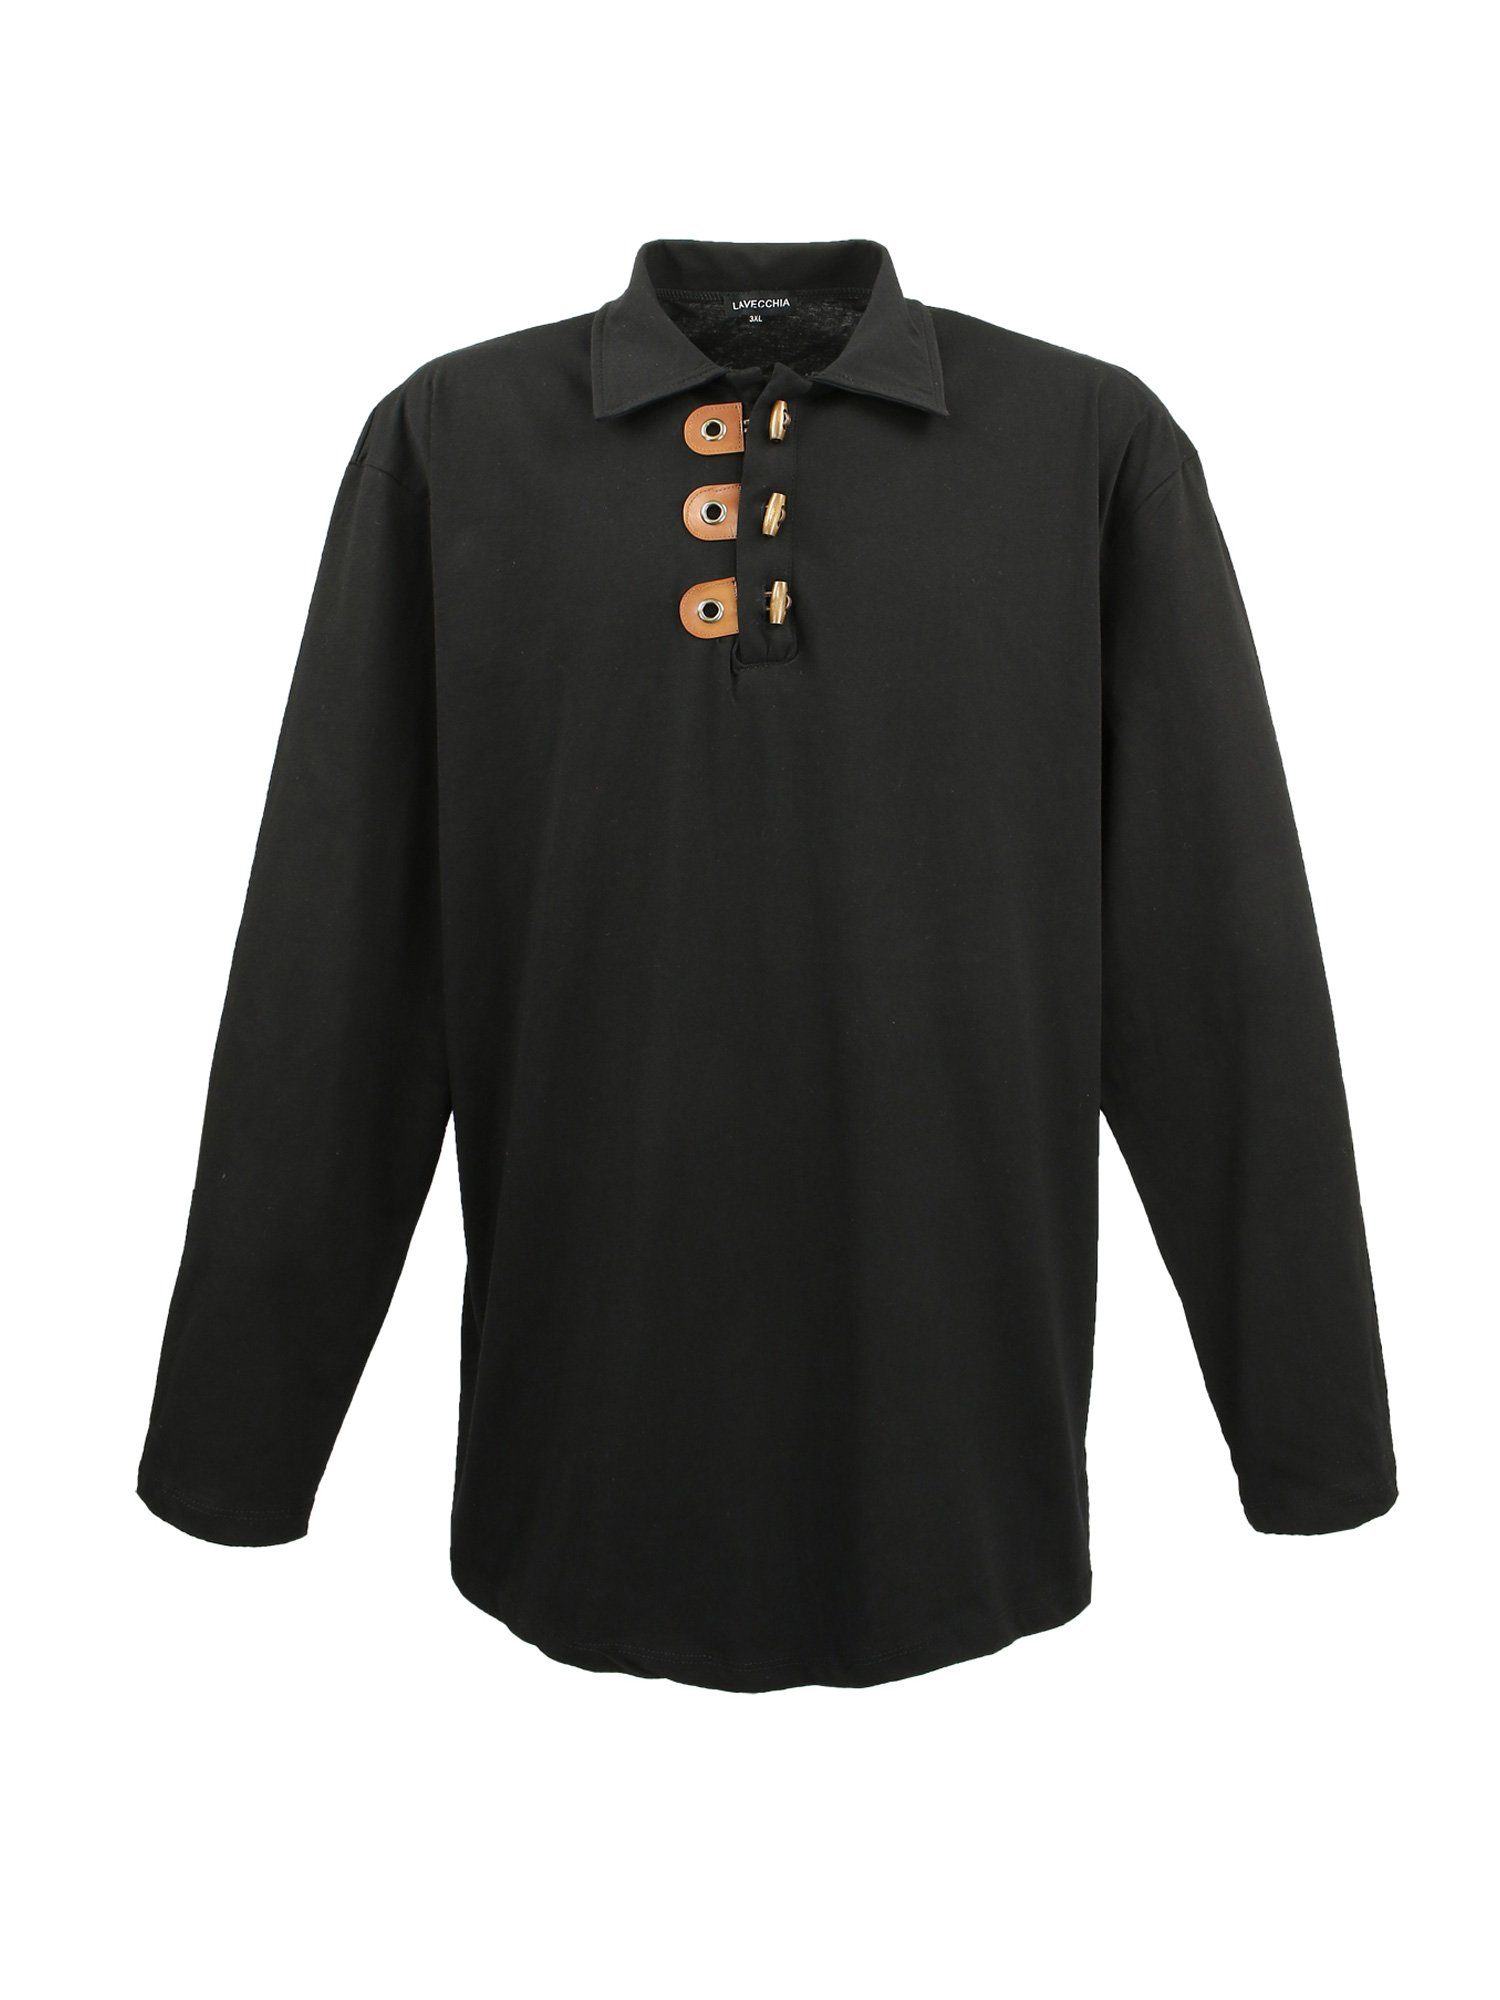 LV-604 Übergrößen Langarmshirt Herren Lavecchia Shirt Langarm-Poloshirt